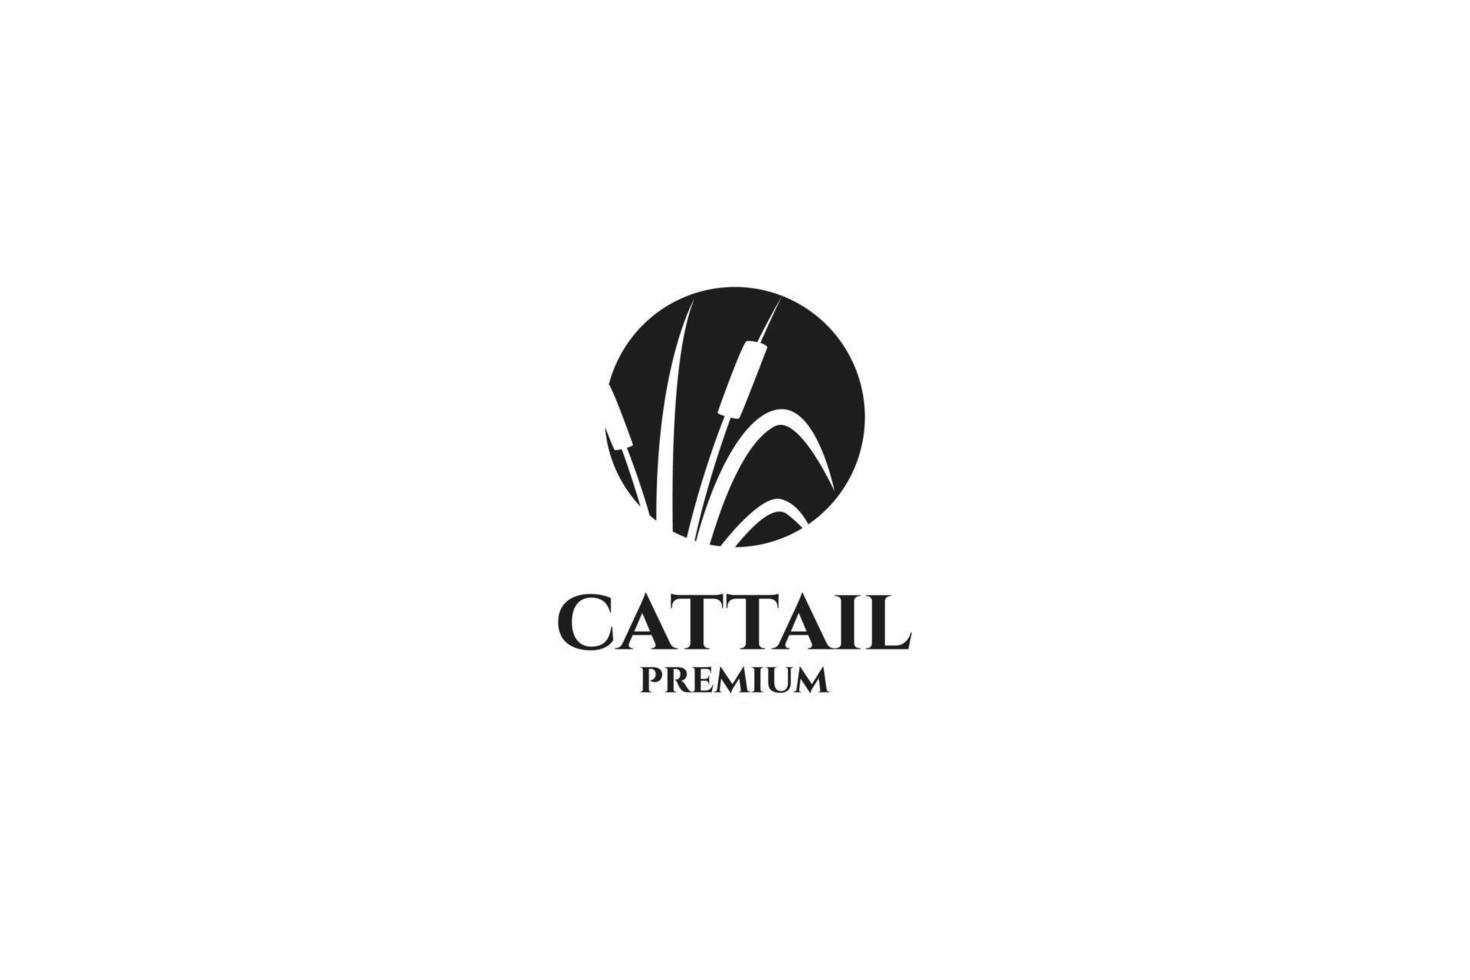 vlak cattail gras logo ontwerp vector illustratie idee